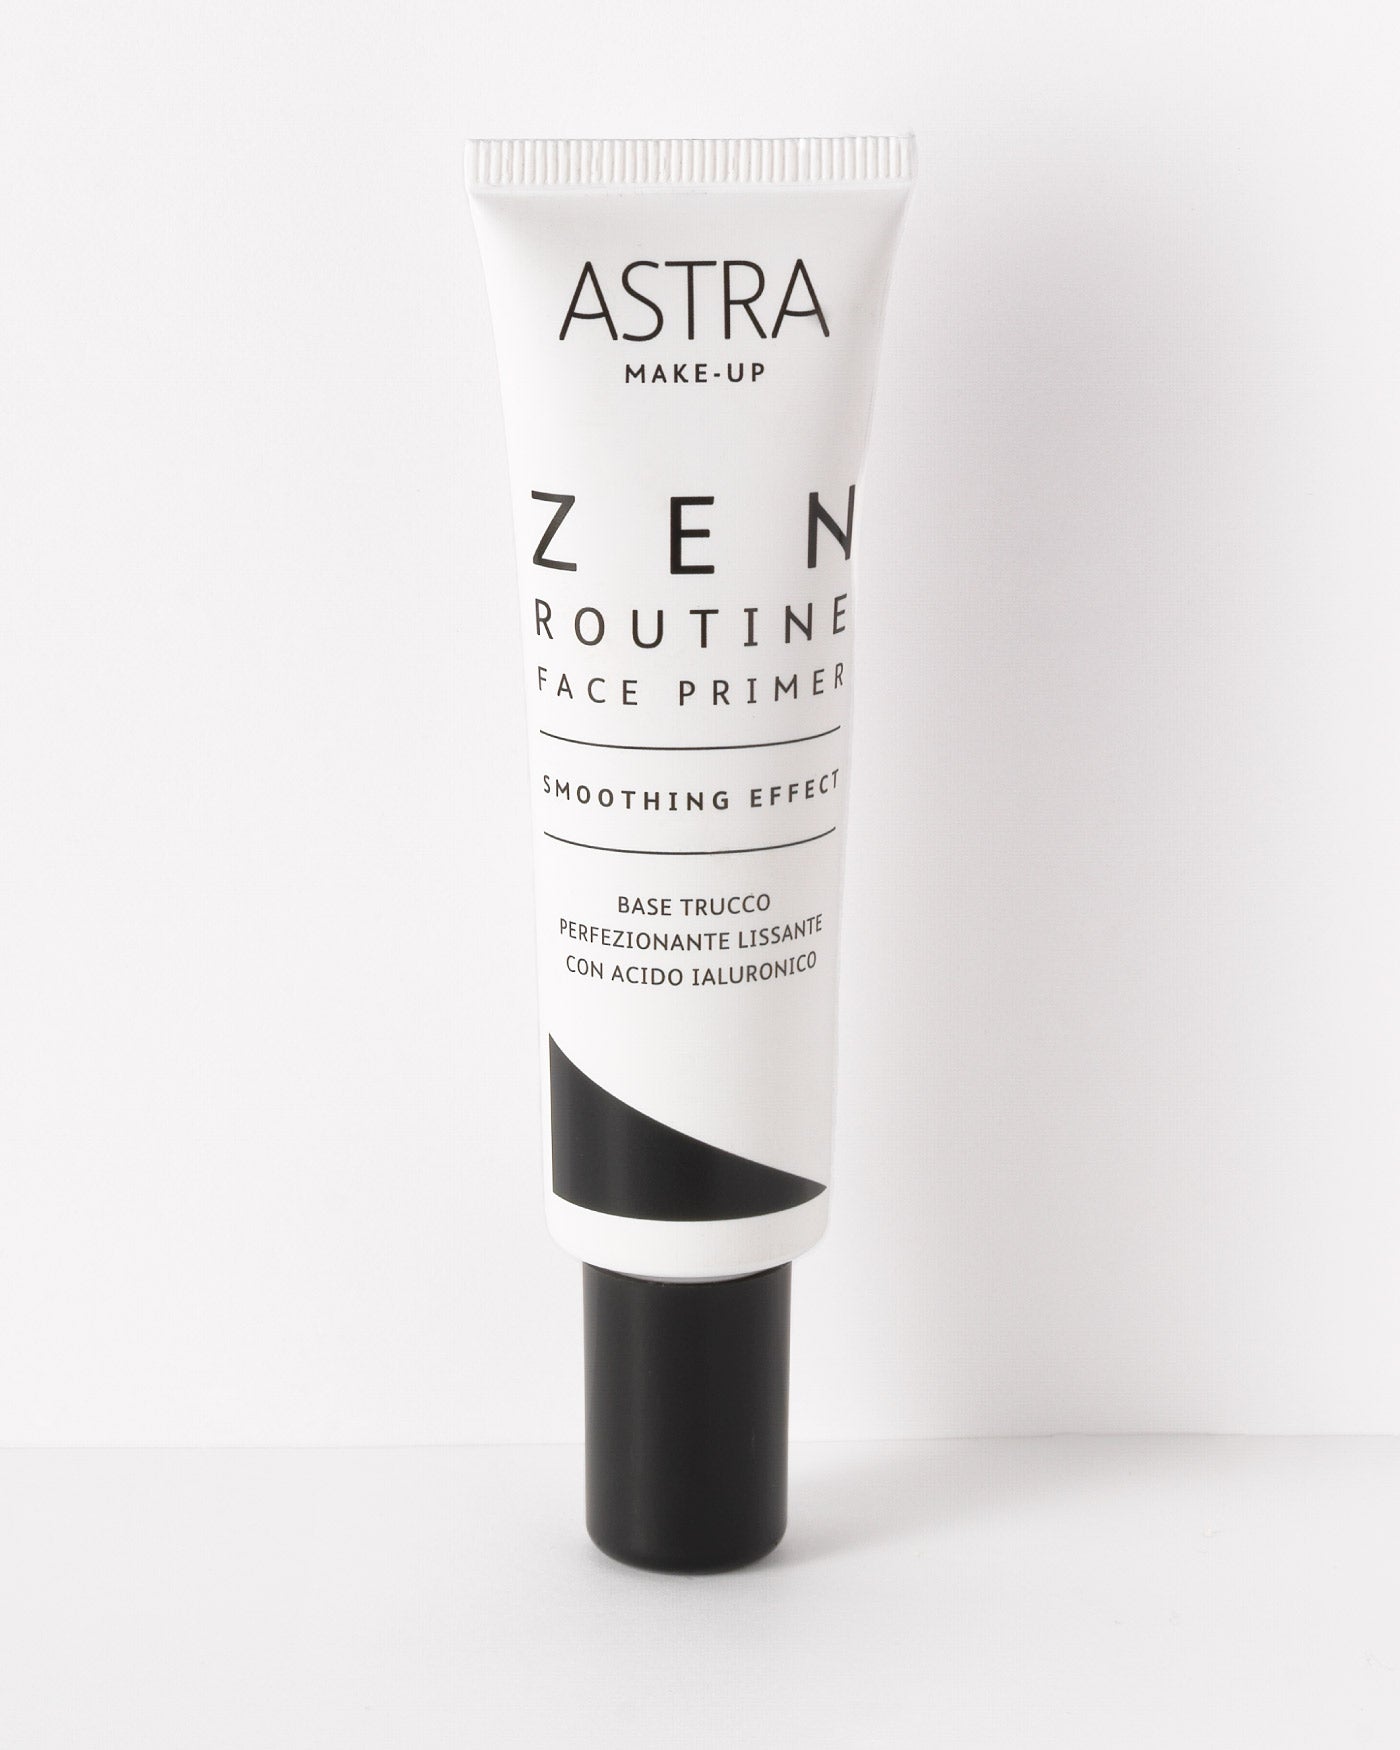 ZEN ROUTINE FACE PRIMER SMOOTHING EFFECT - Zen Routine - Astra Make-Up